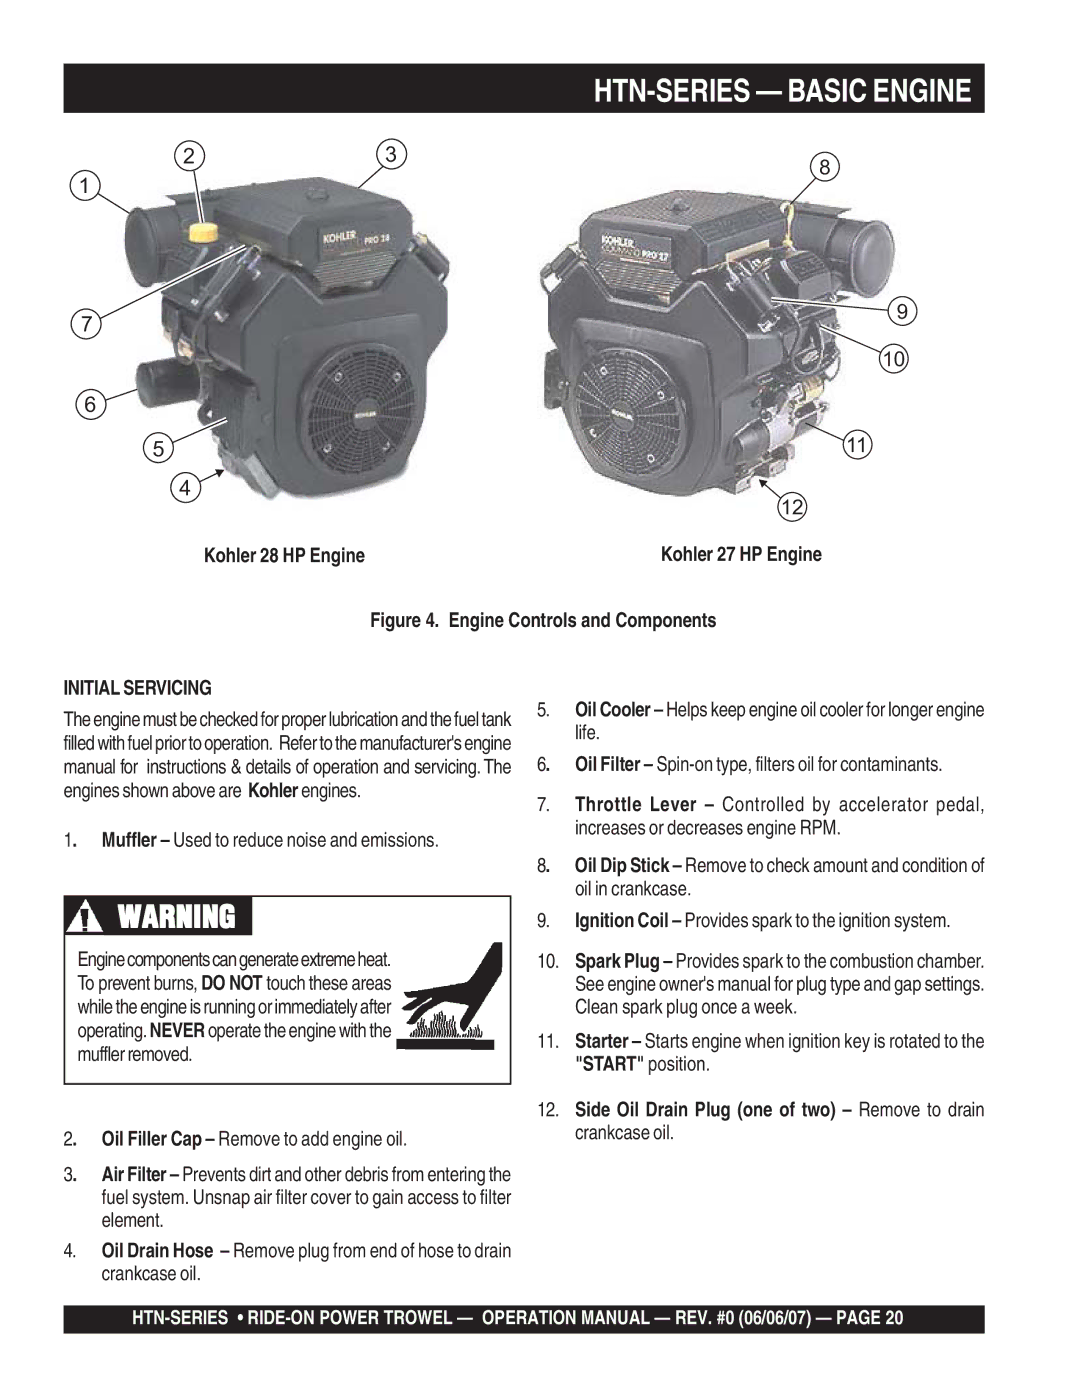 Multiquip HTN-27K-TCSL operation manual HTN-SERIES Basic Engine, Kohler 28 HP Engine Kohler 27 HP Engine, Initial Servicing 